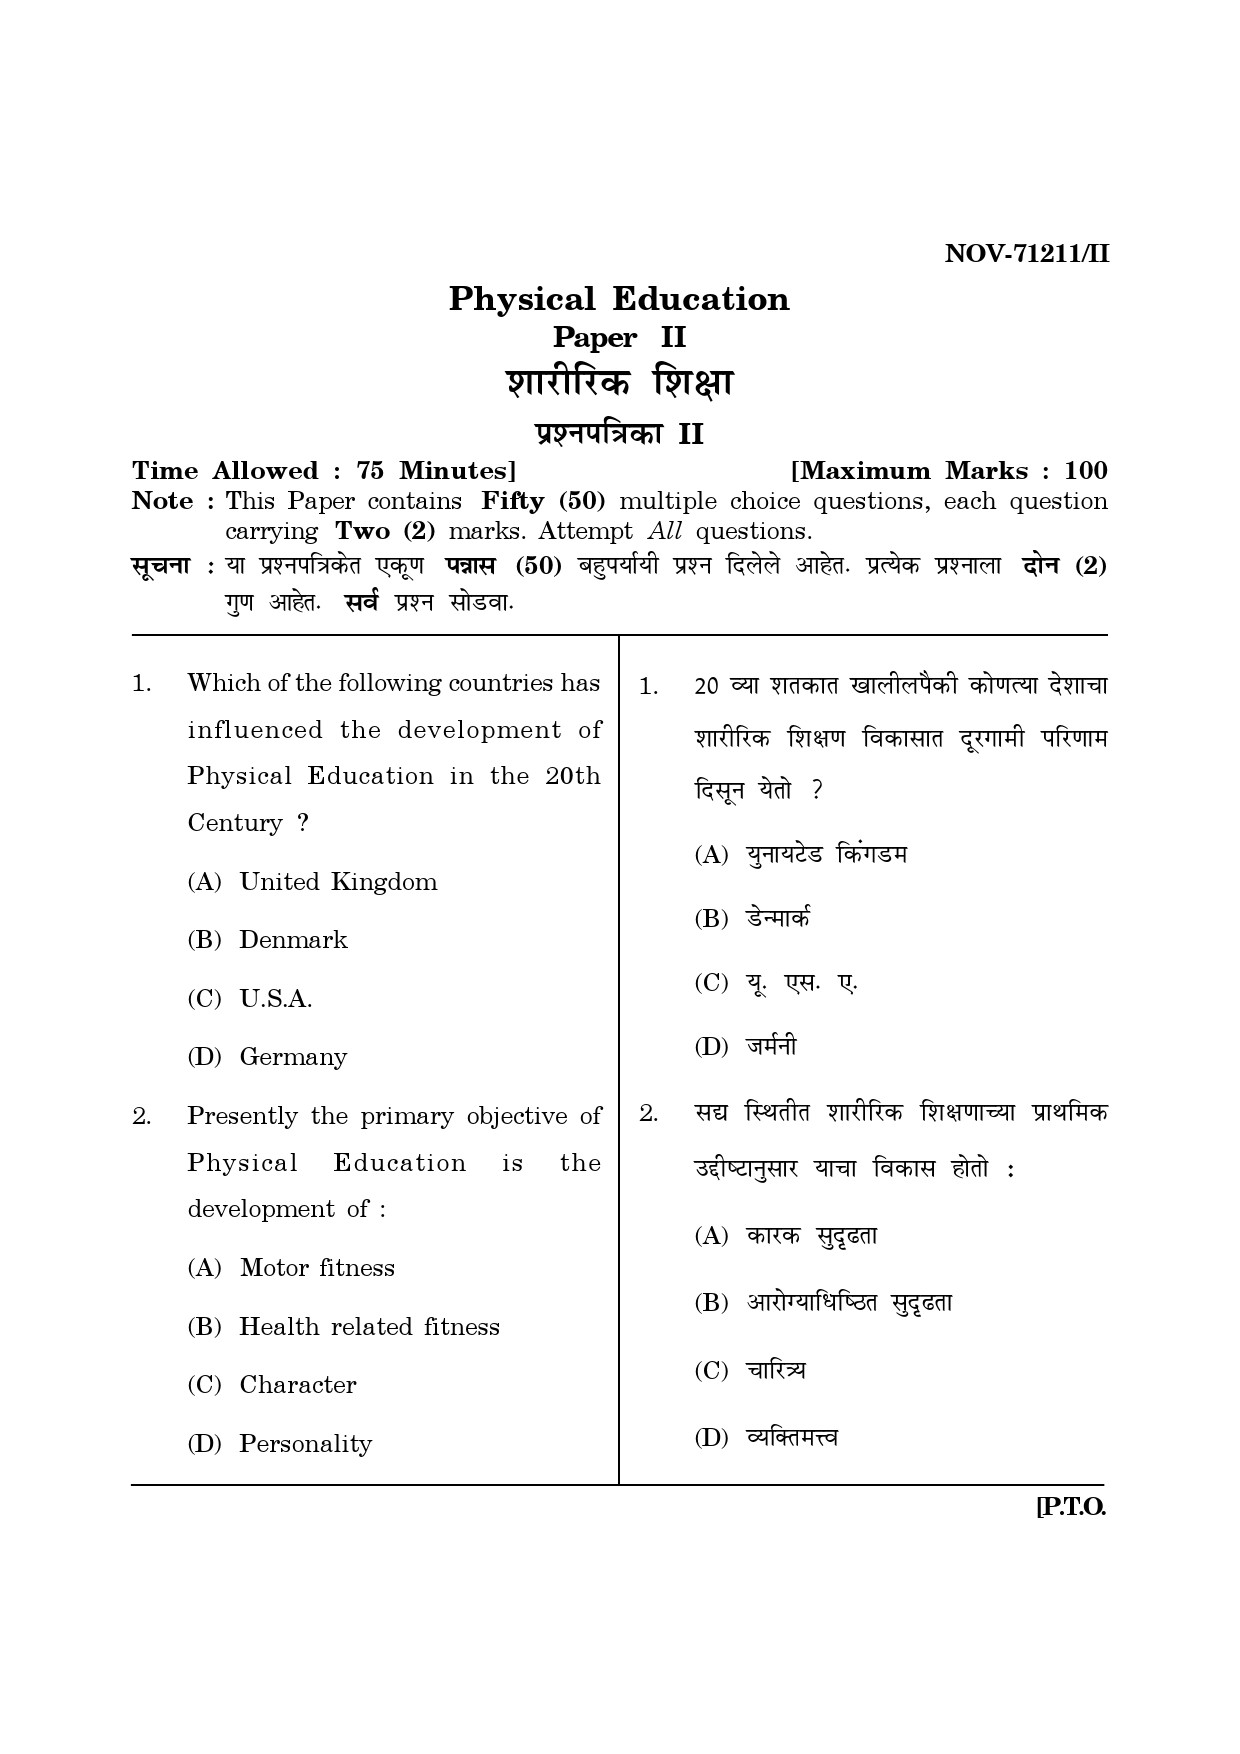 Maharashtra SET Physical Education Question Paper II November 2011 1